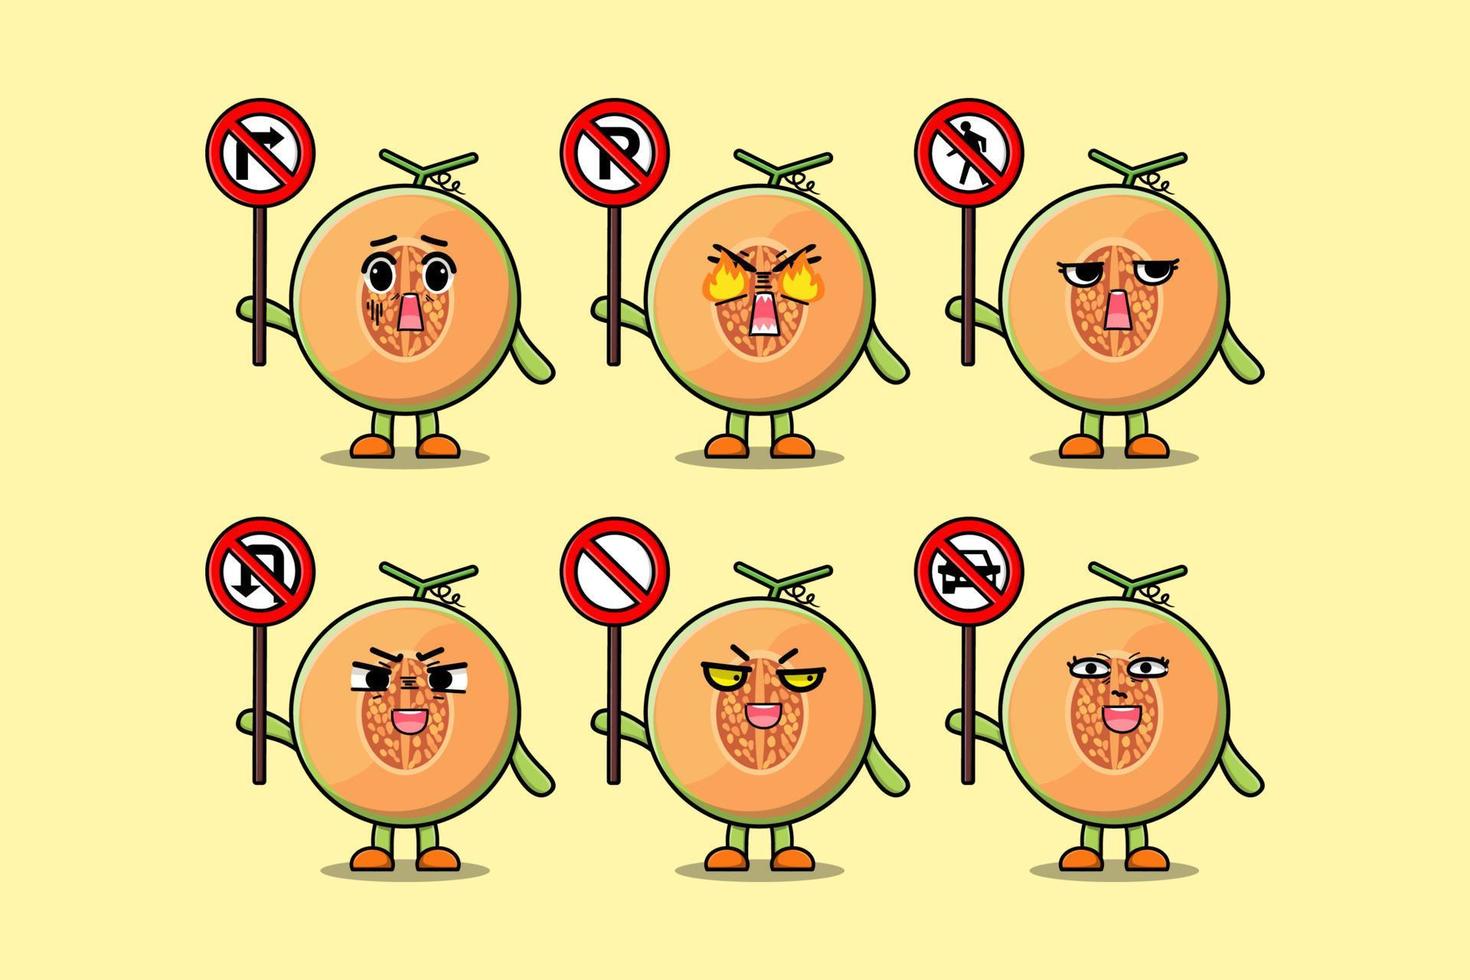 Cute Melon cartoon character holding traffic sign vector